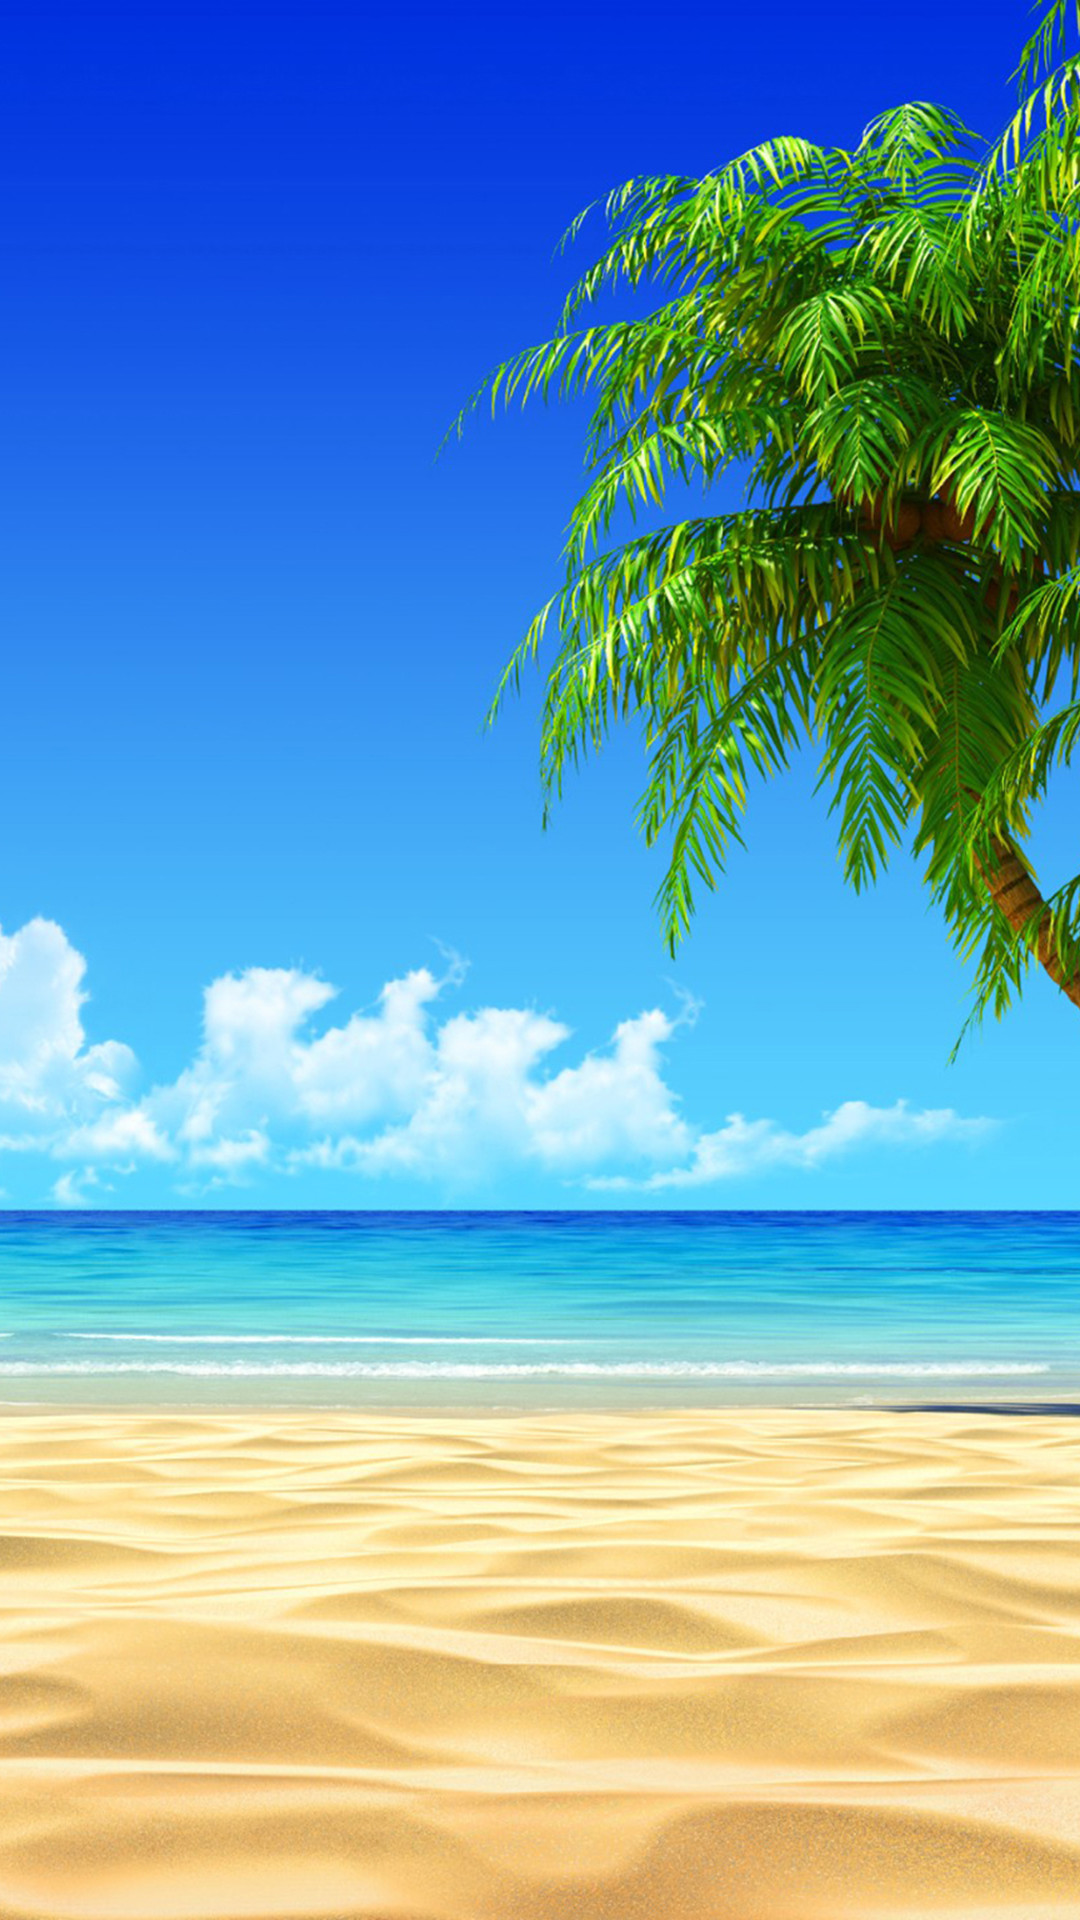 Beach House On Tropical Island Hd Wallpaper - Beach Iphone Wallpaper Hd , HD Wallpaper & Backgrounds